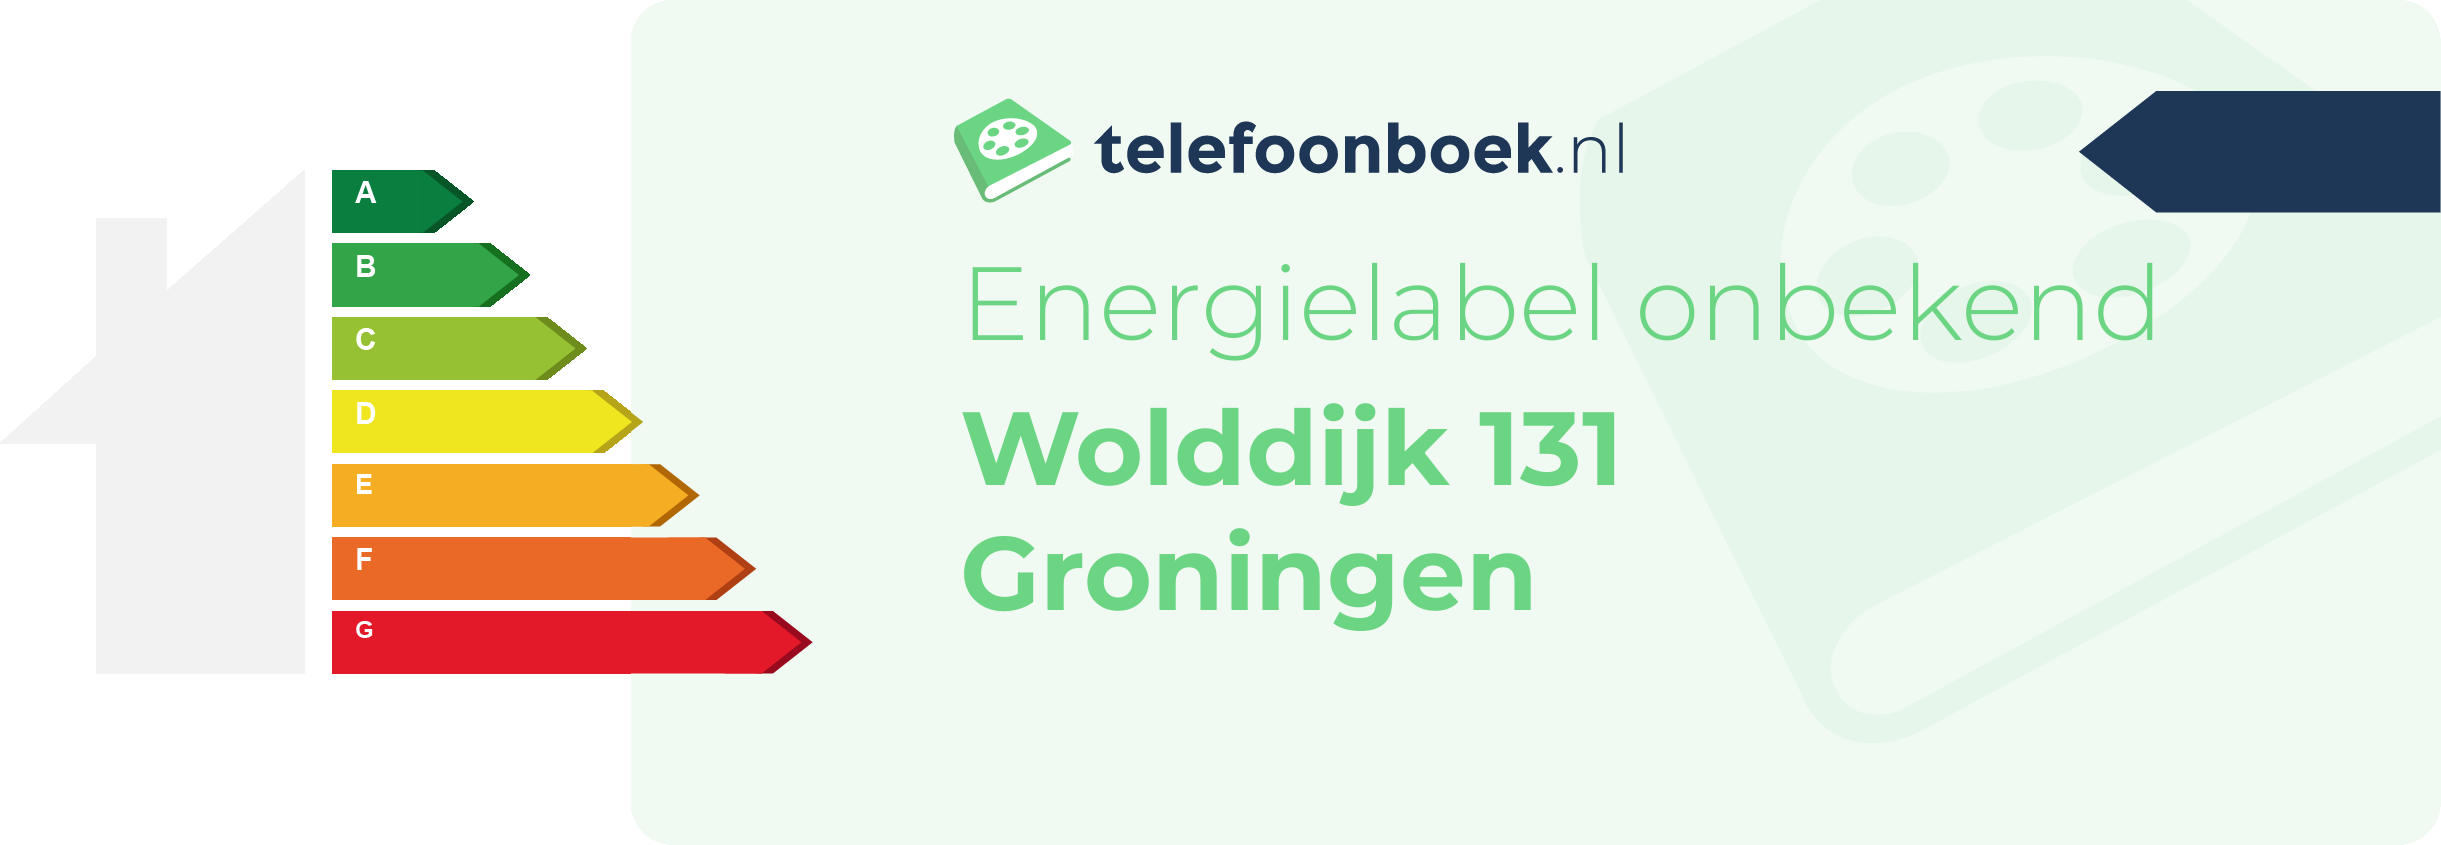 Energielabel Wolddijk 131 Groningen